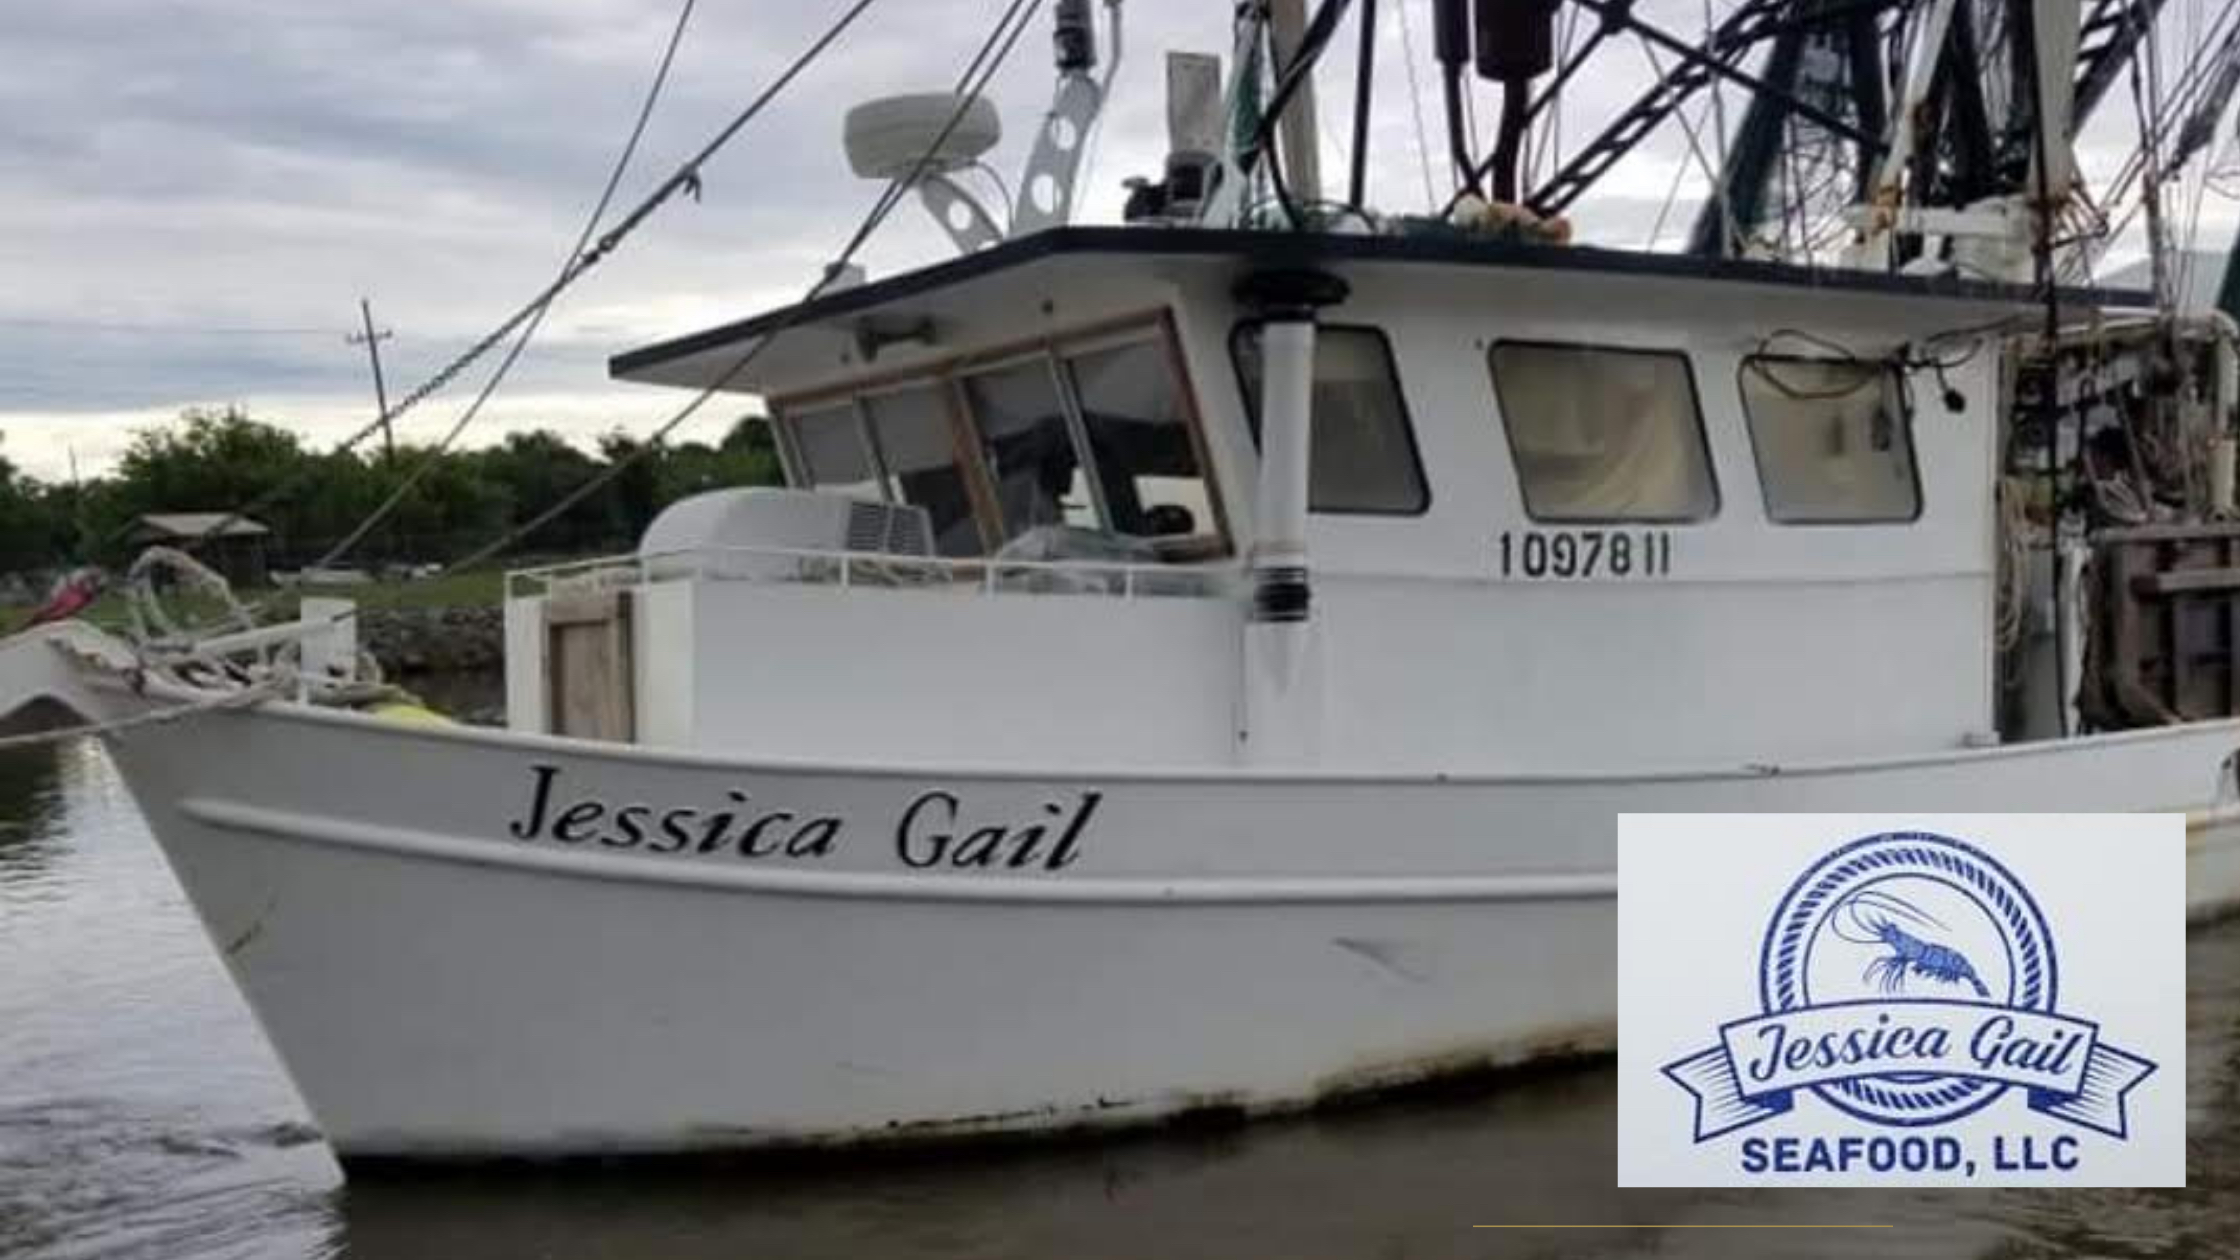 Jessica Gail Seafood